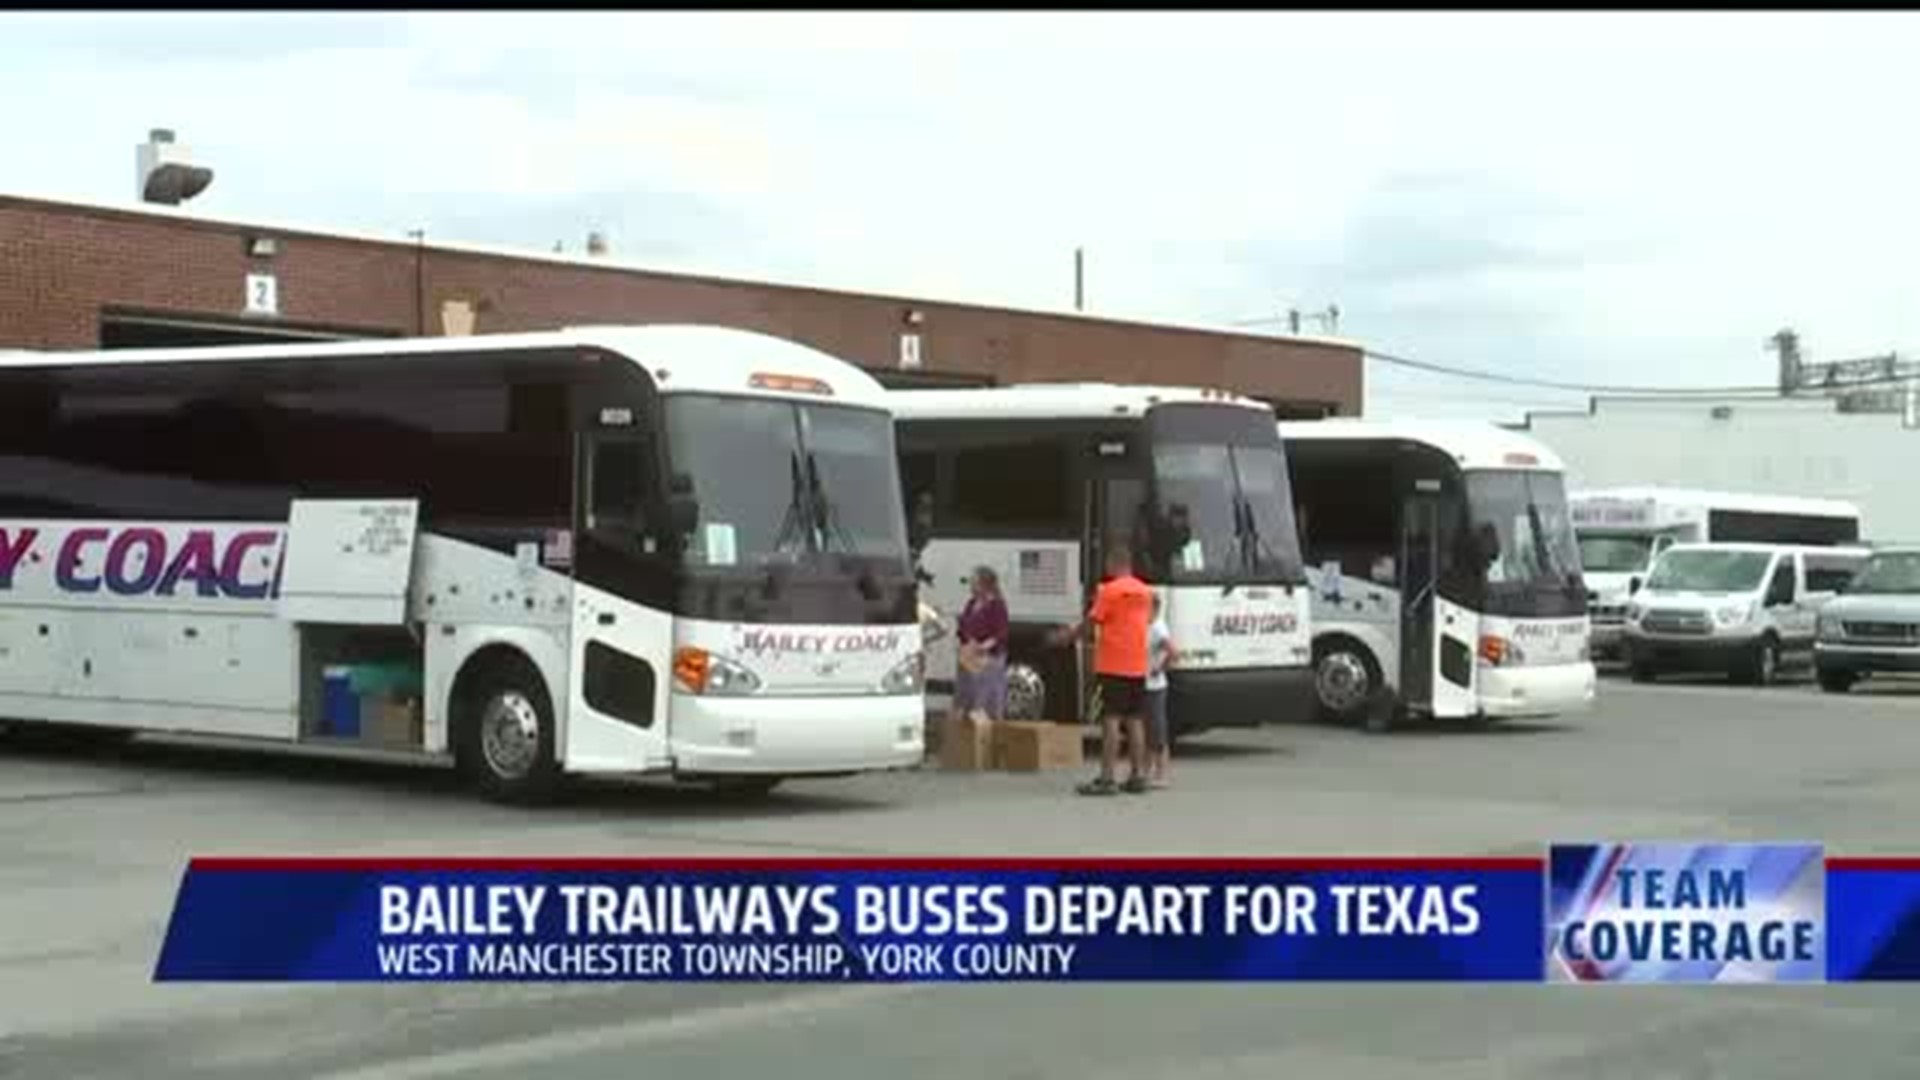 Bailey Coach sends 3 buses to Texas full of supplies